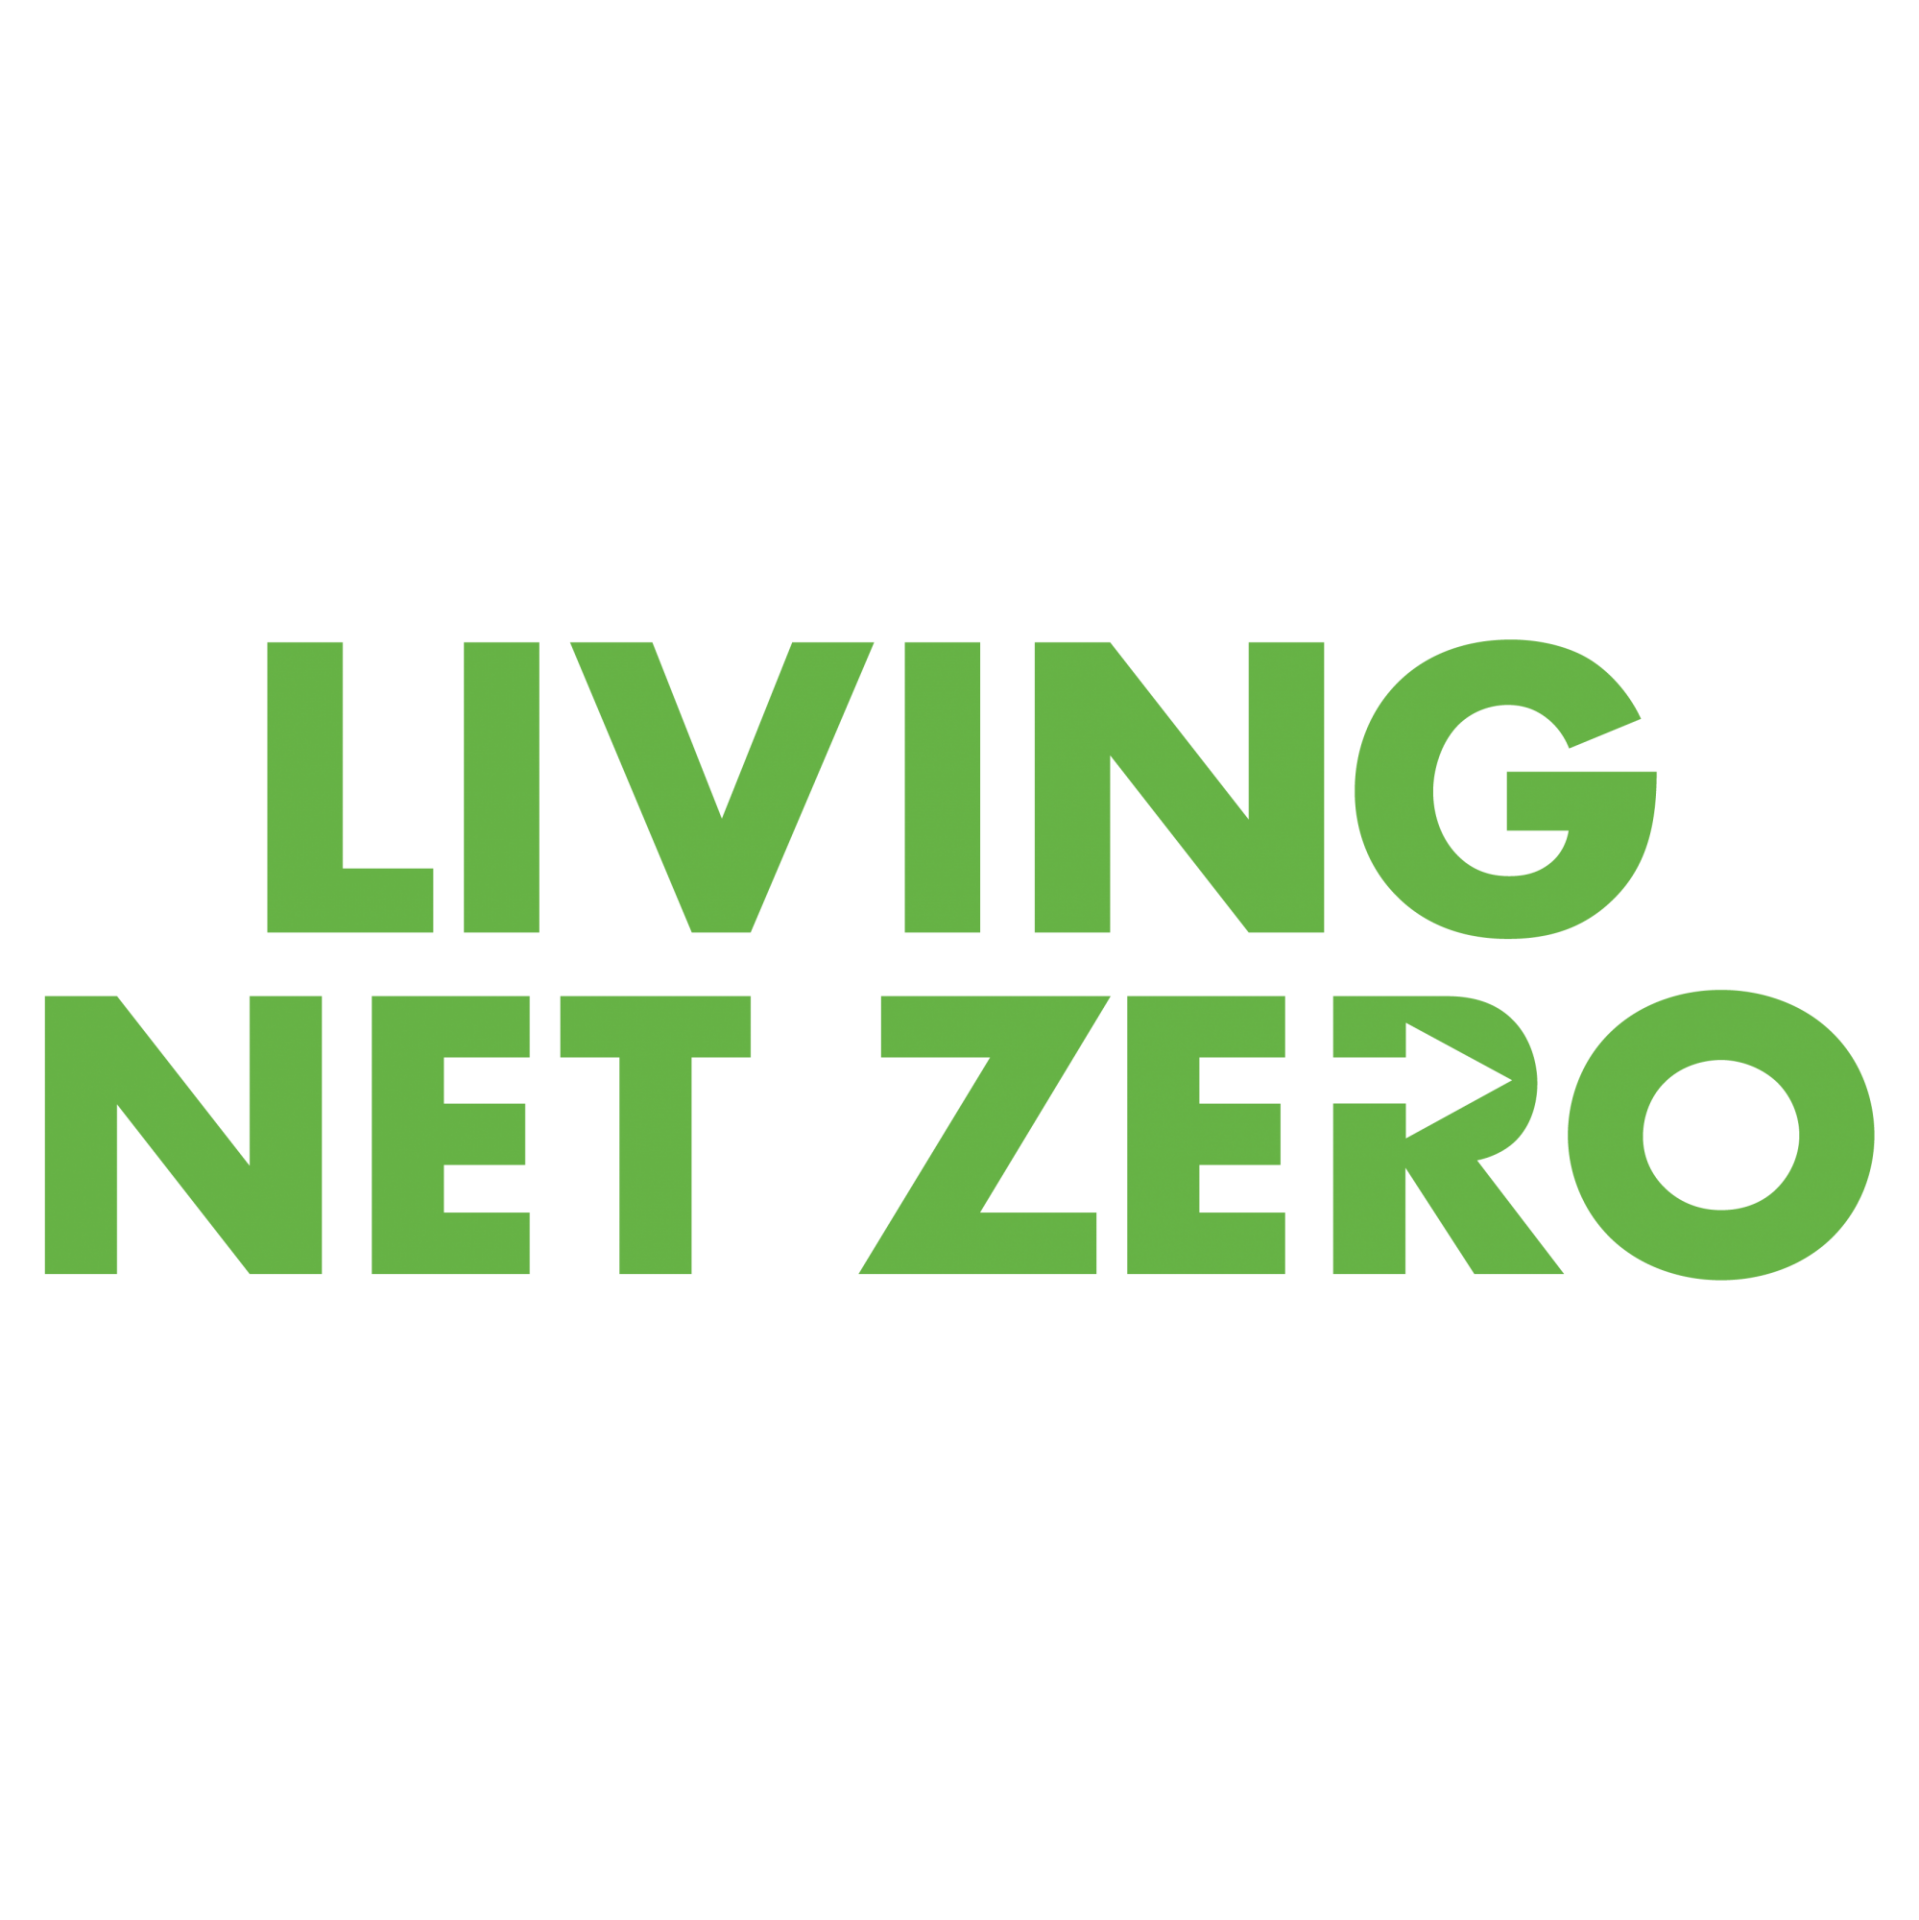 Living net zero